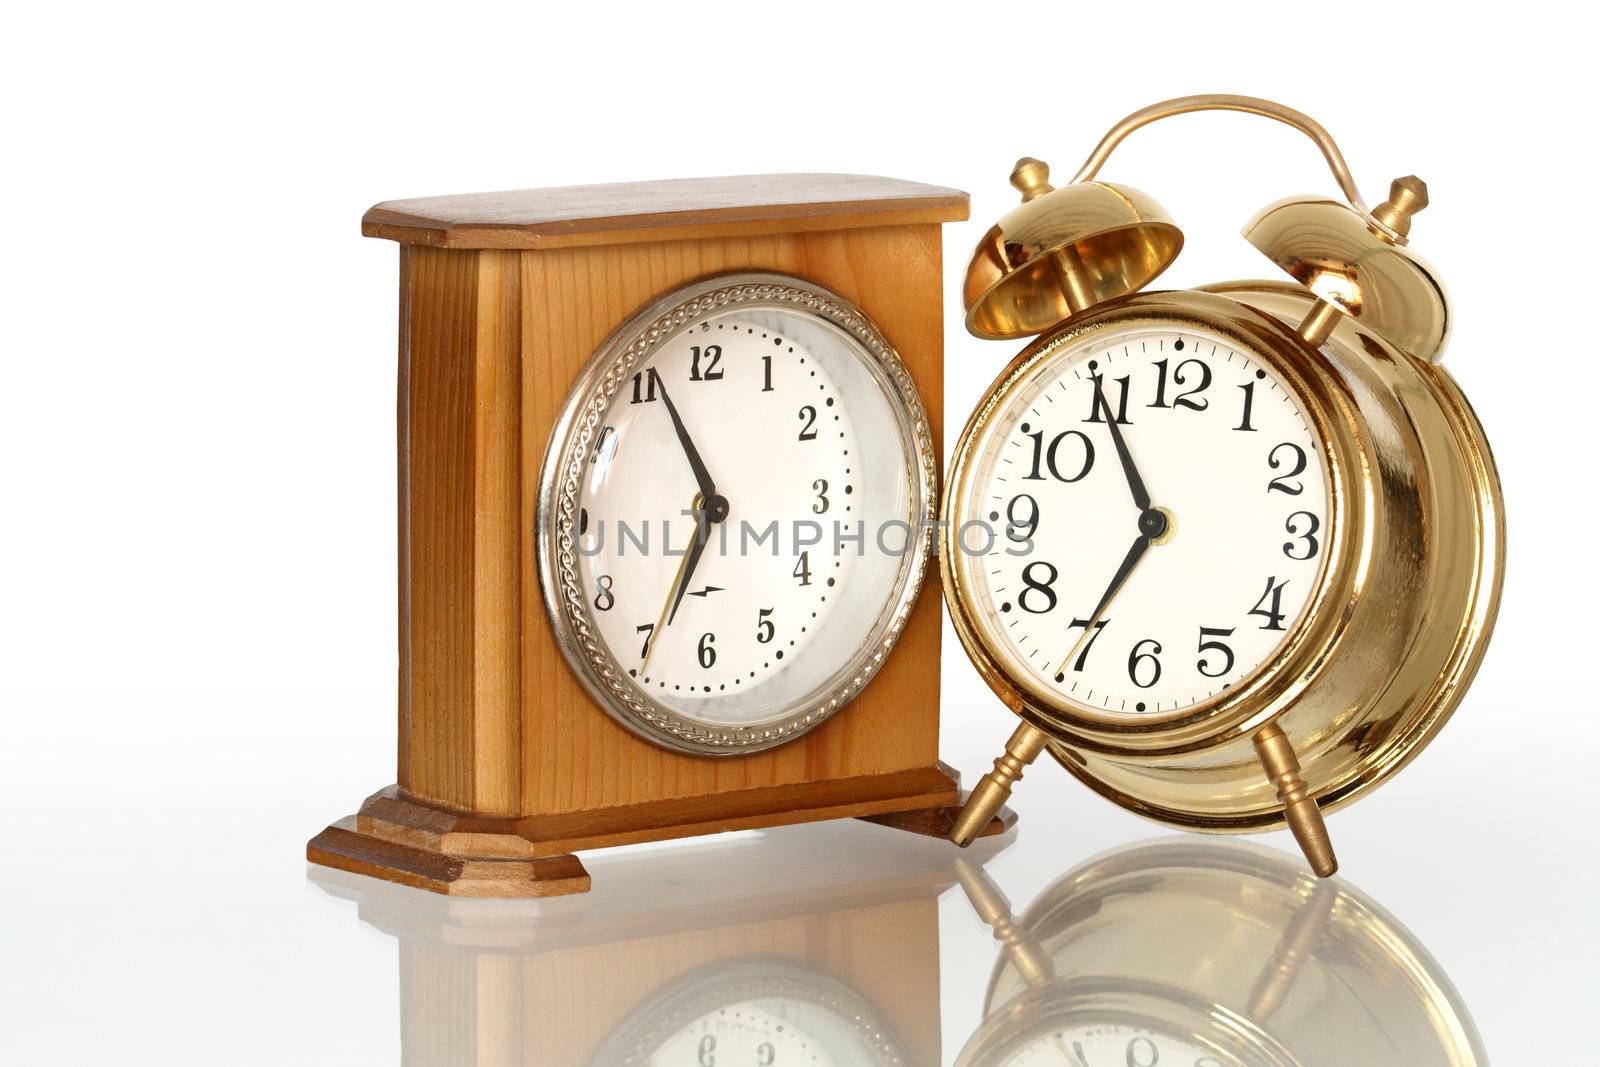 Two Alarm Clocks by kvkirillov